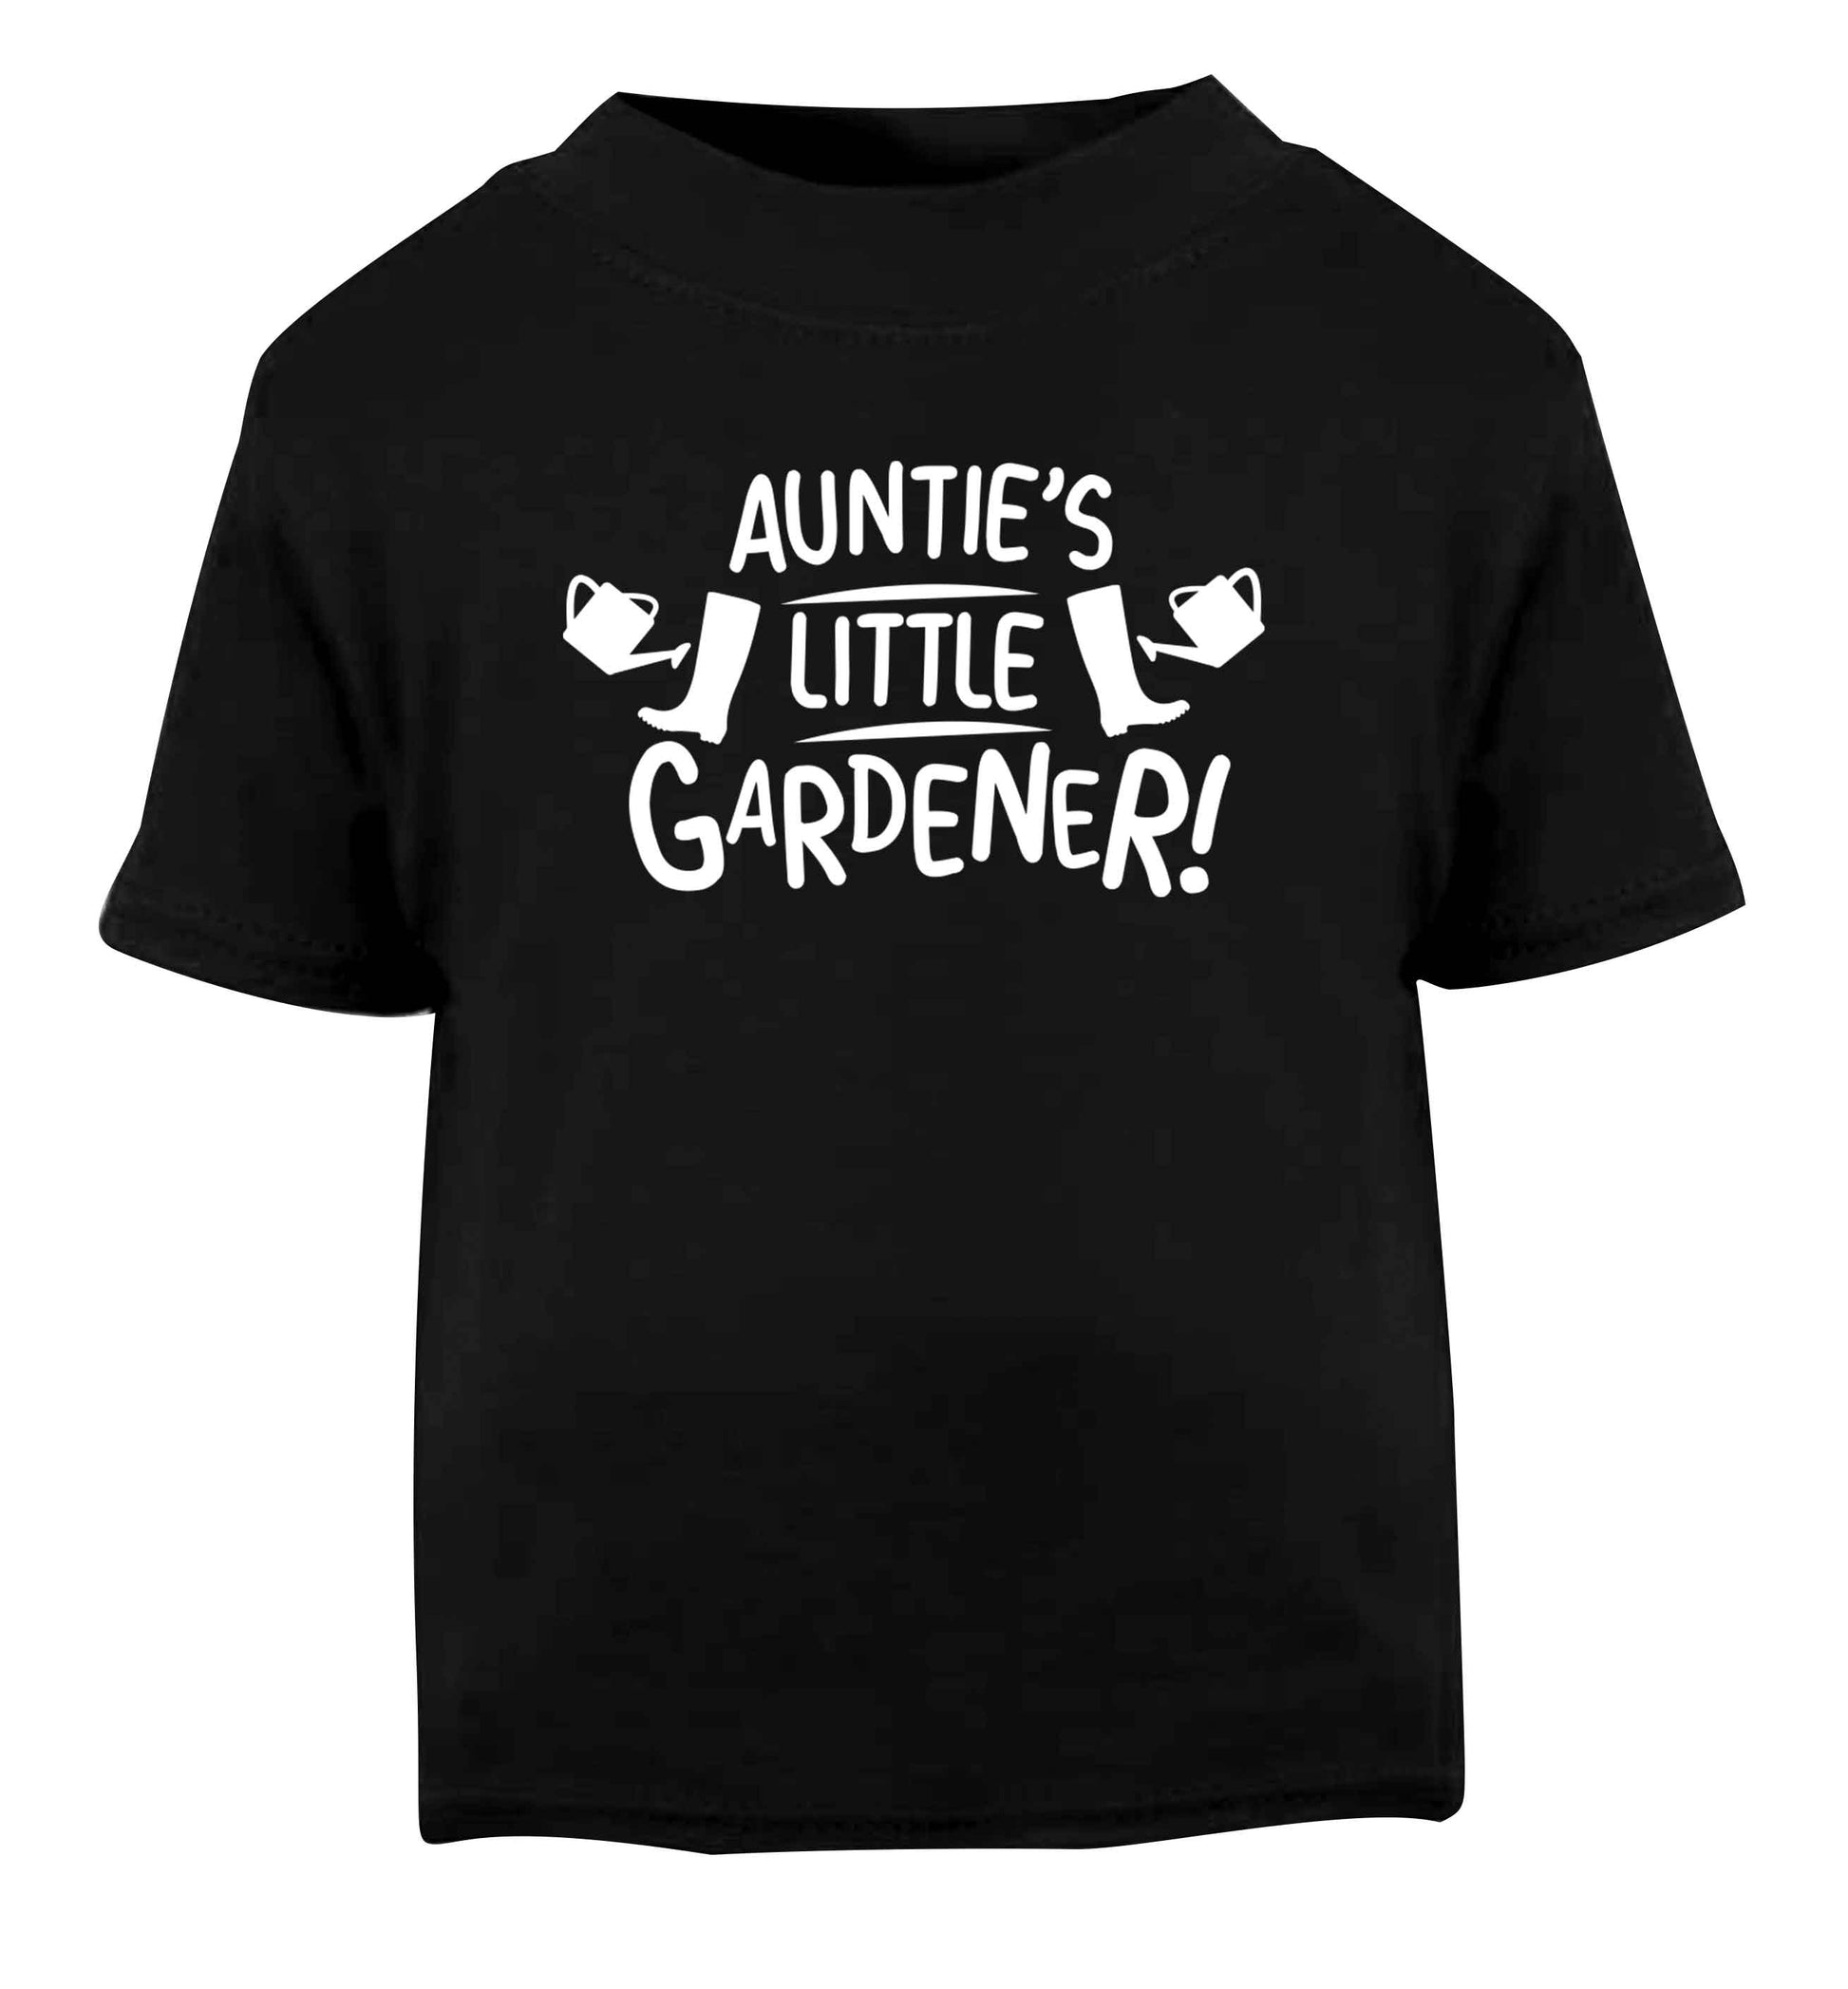 Auntie's little gardener Black Baby Toddler Tshirt 2 years